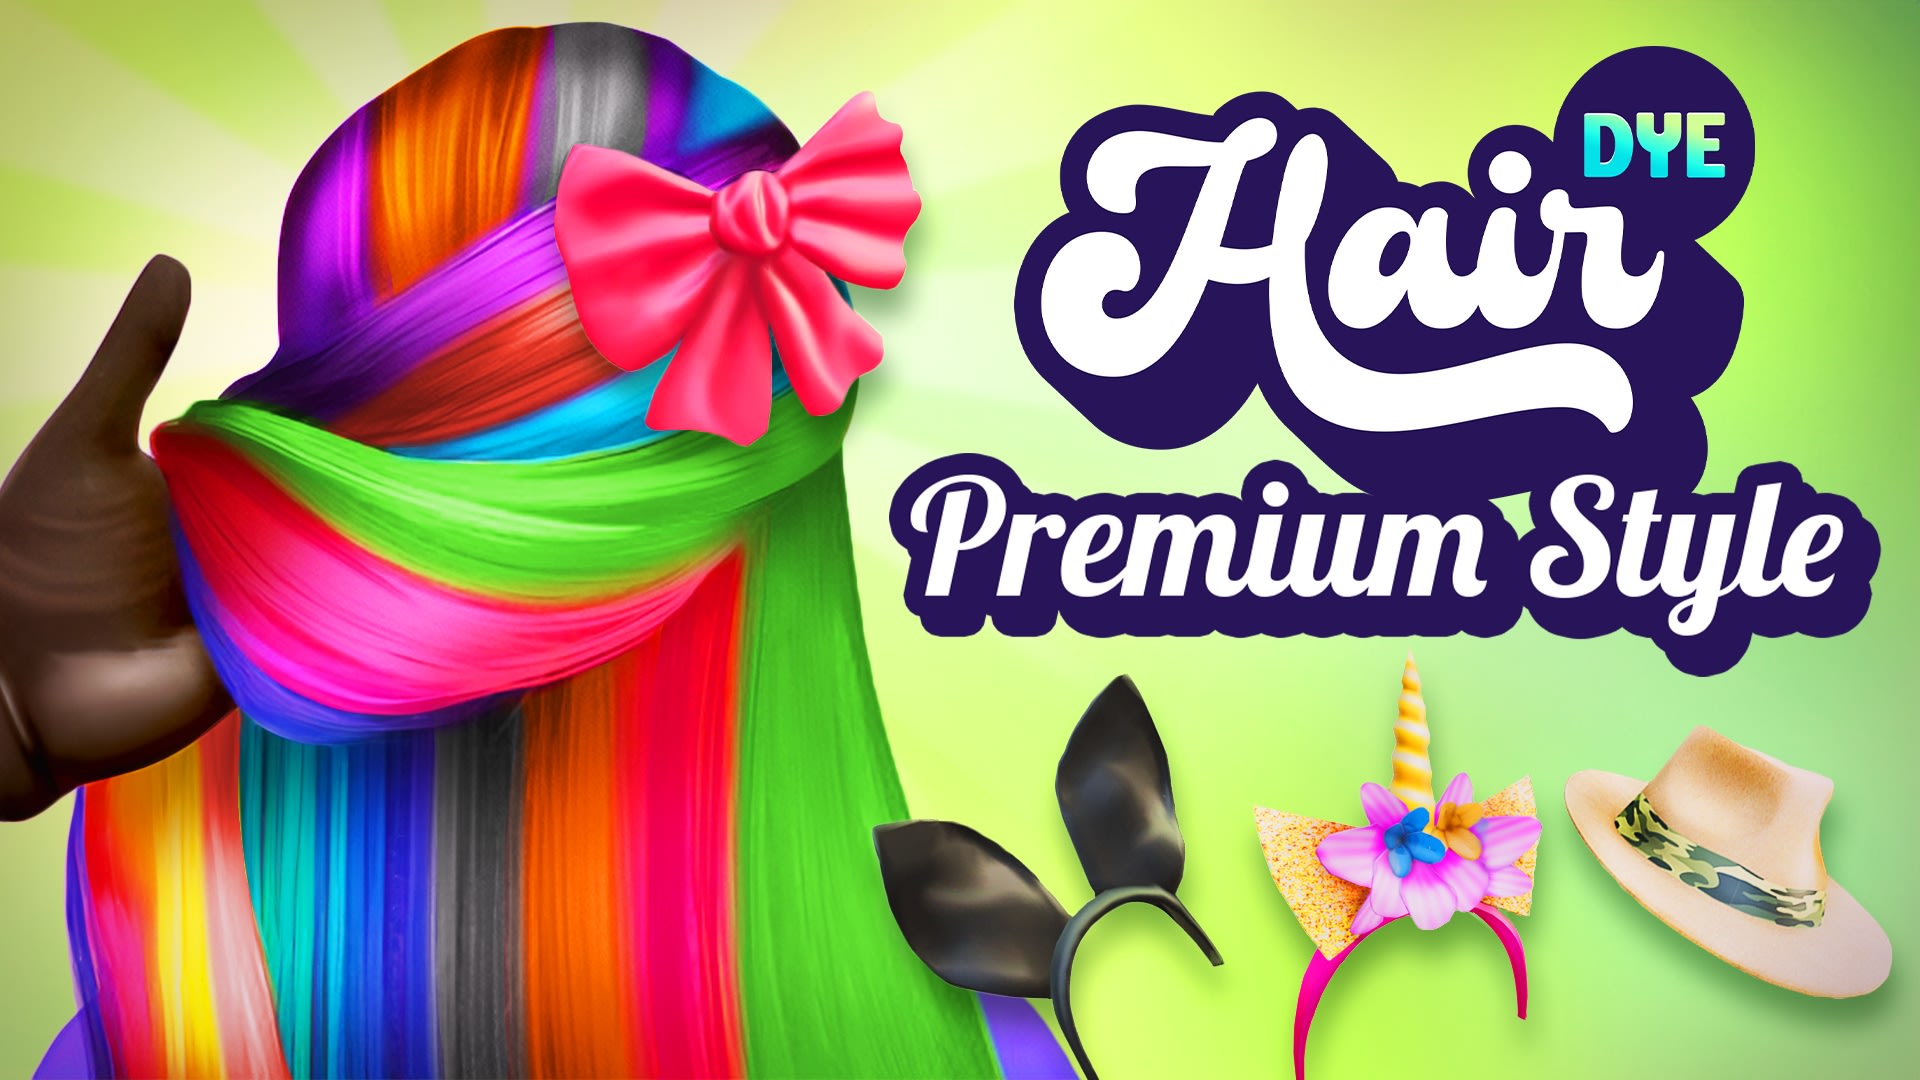 Hair Dye: Premium Style 1